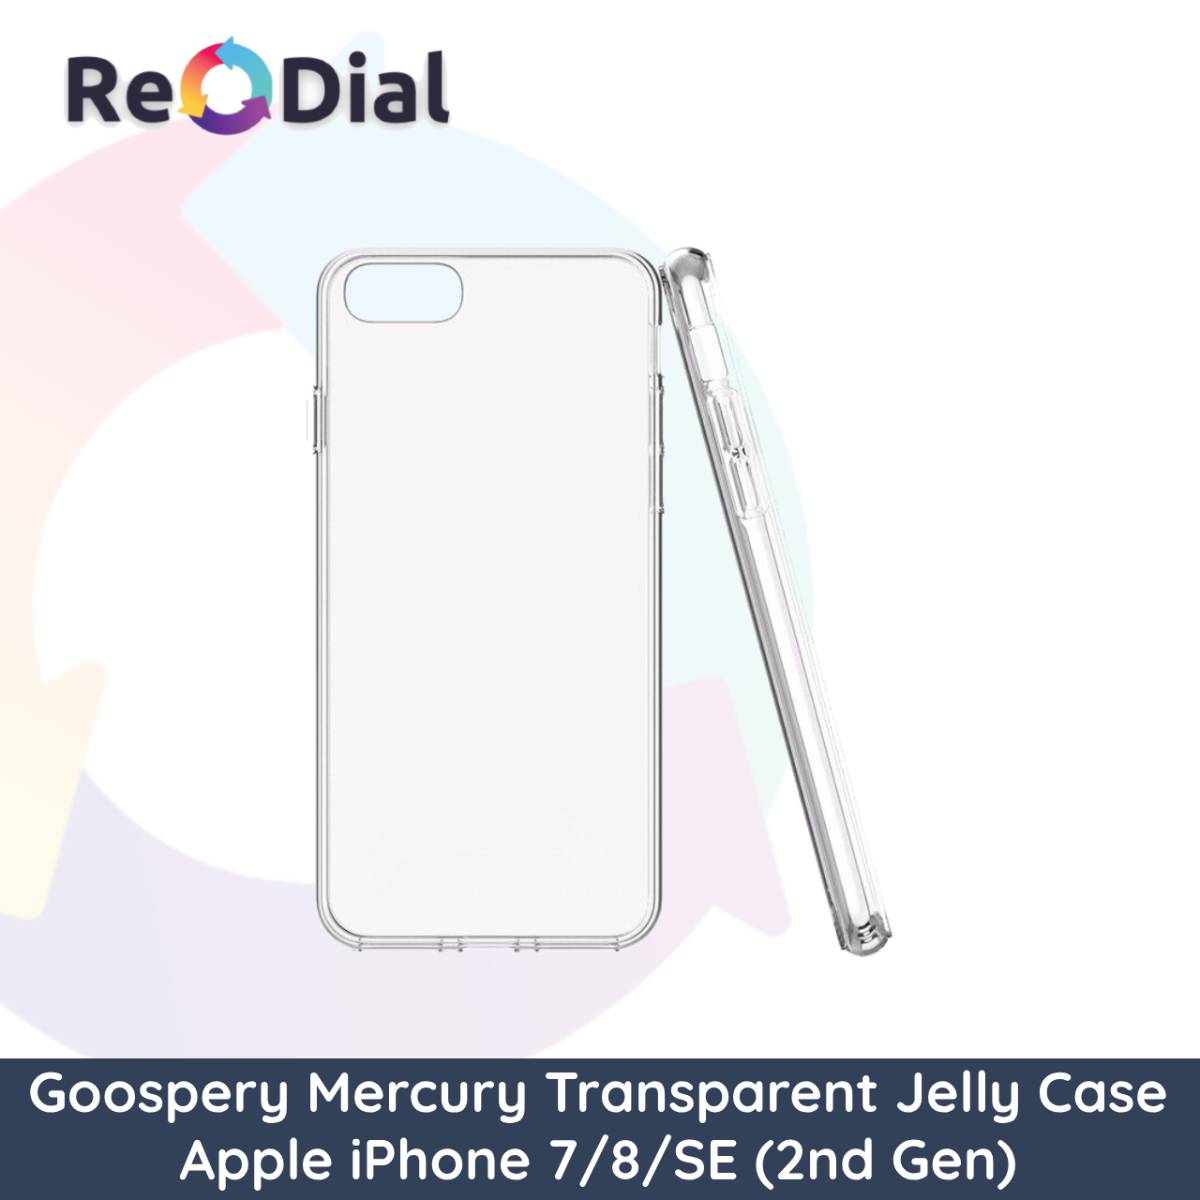 Goospery Mercury Transparent Jelly Case for Apple iPhone 7/8/SE (2nd Gen)